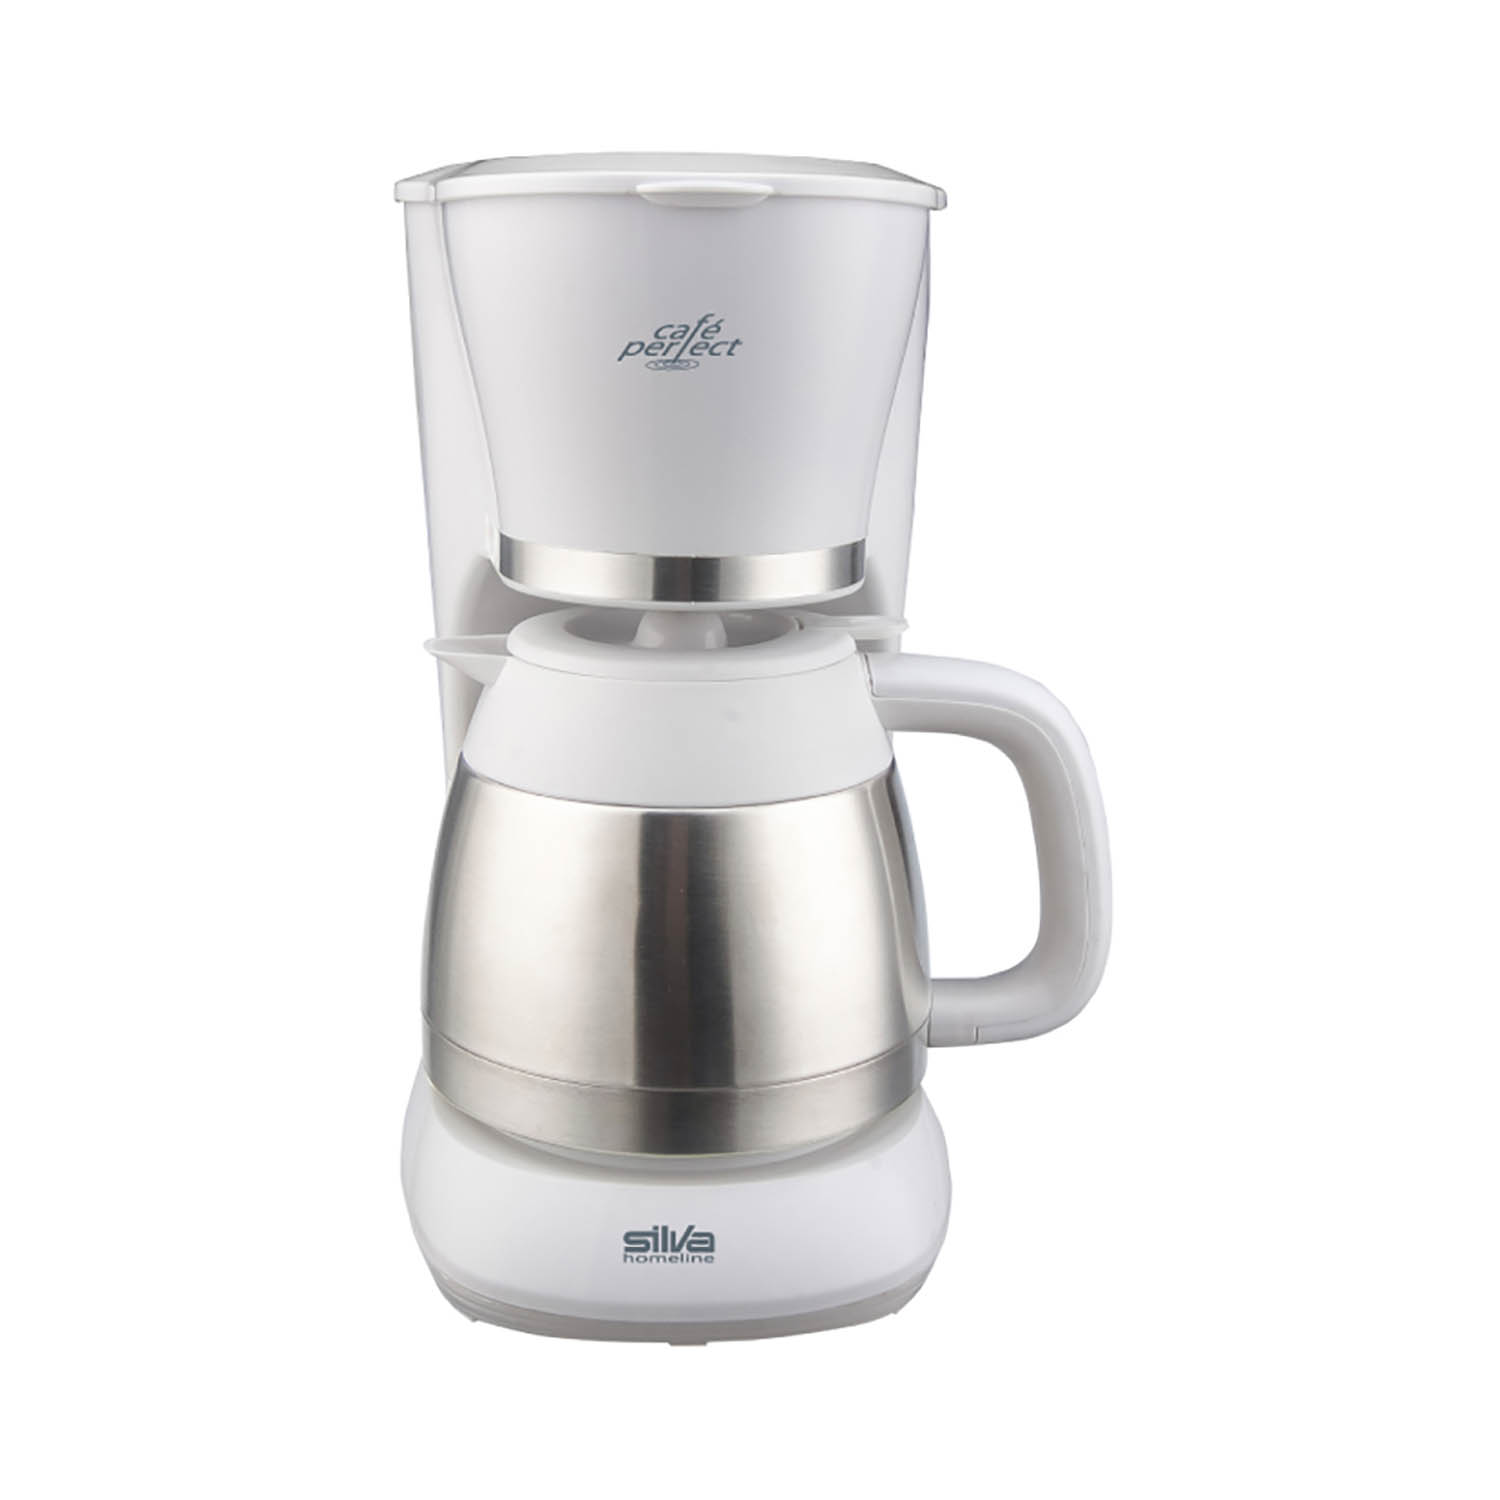 Silva Homeline Thermo Kaffeemaschine, Edelstahl, 1 L, weiß